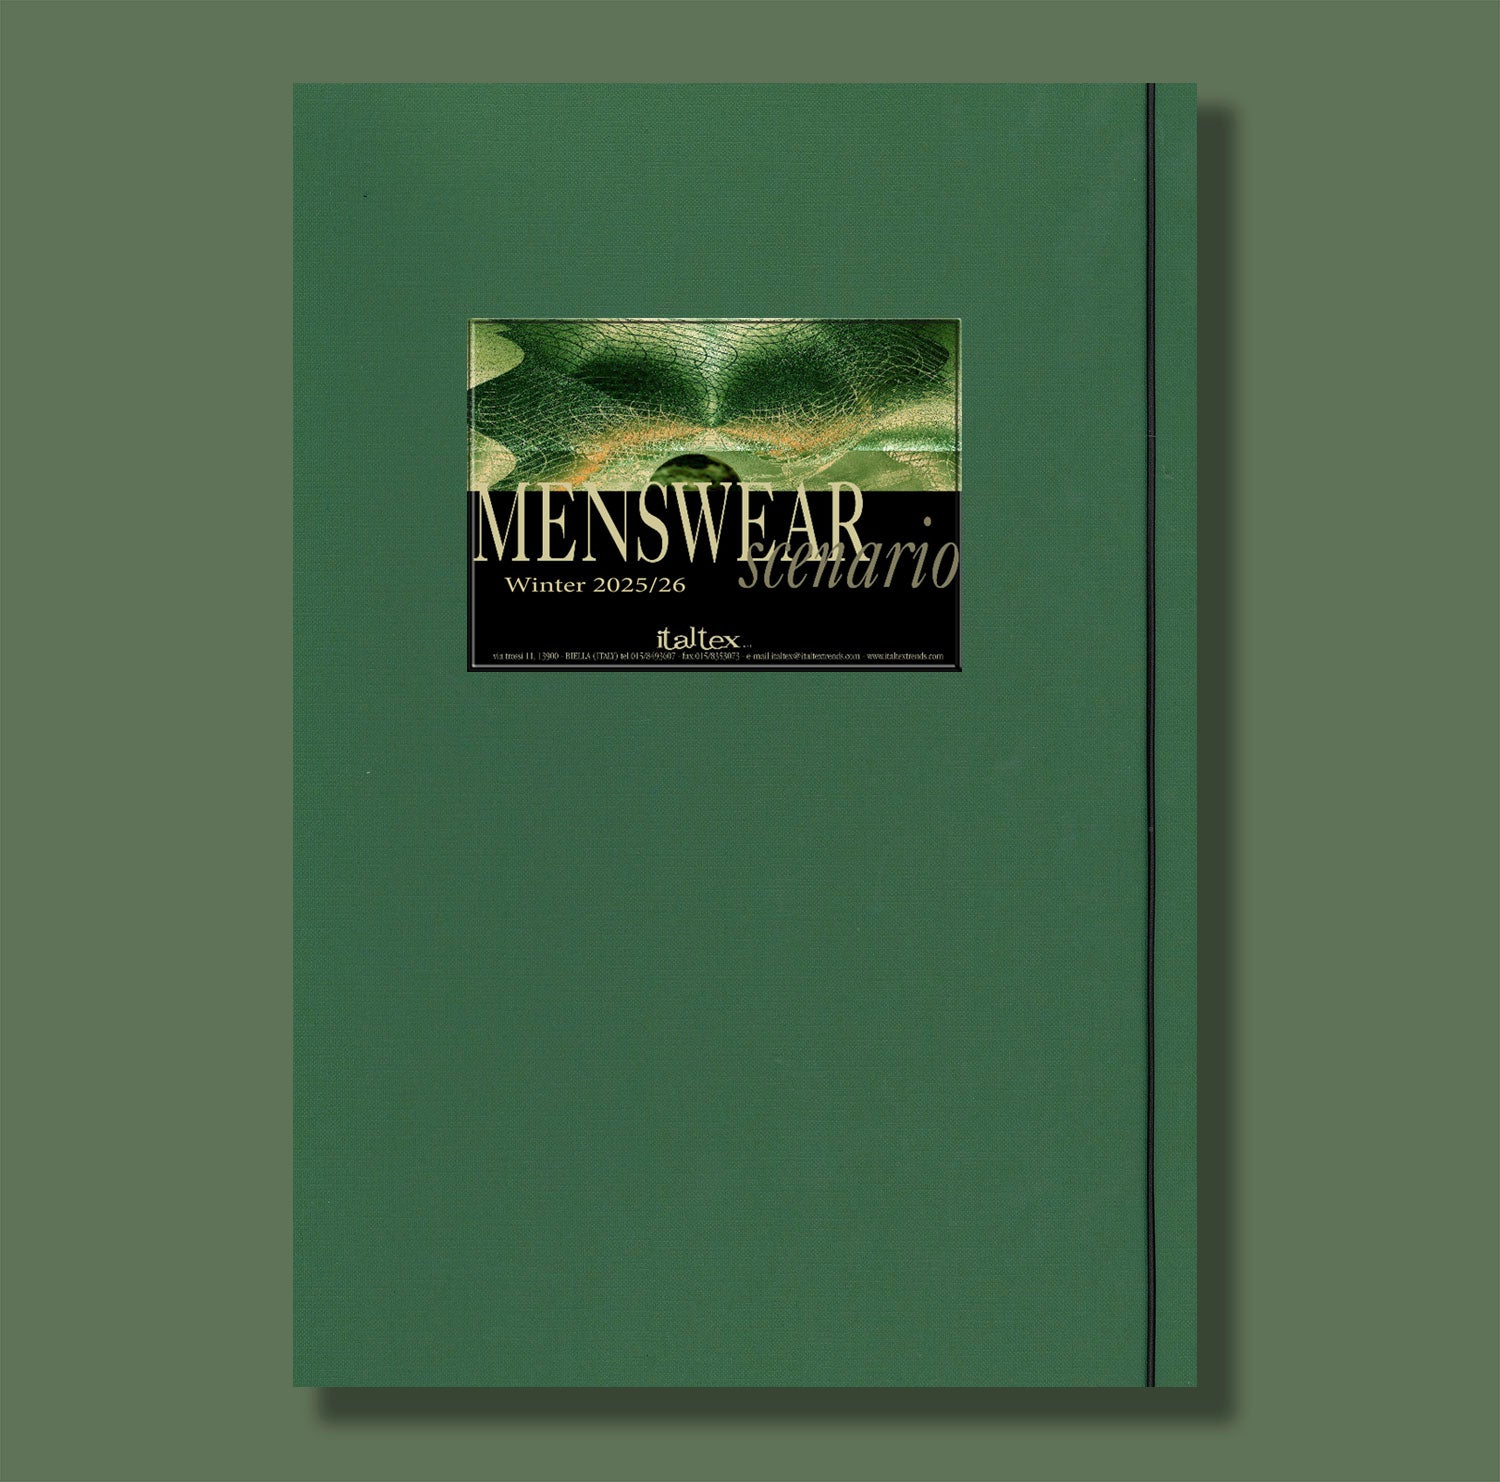 The cover of the Italtex Menswear Scenatio book AW 25/26 is a dark green folder with Menswear Scenario Autumn/Winter 2025/26 written in white on an abstract design background